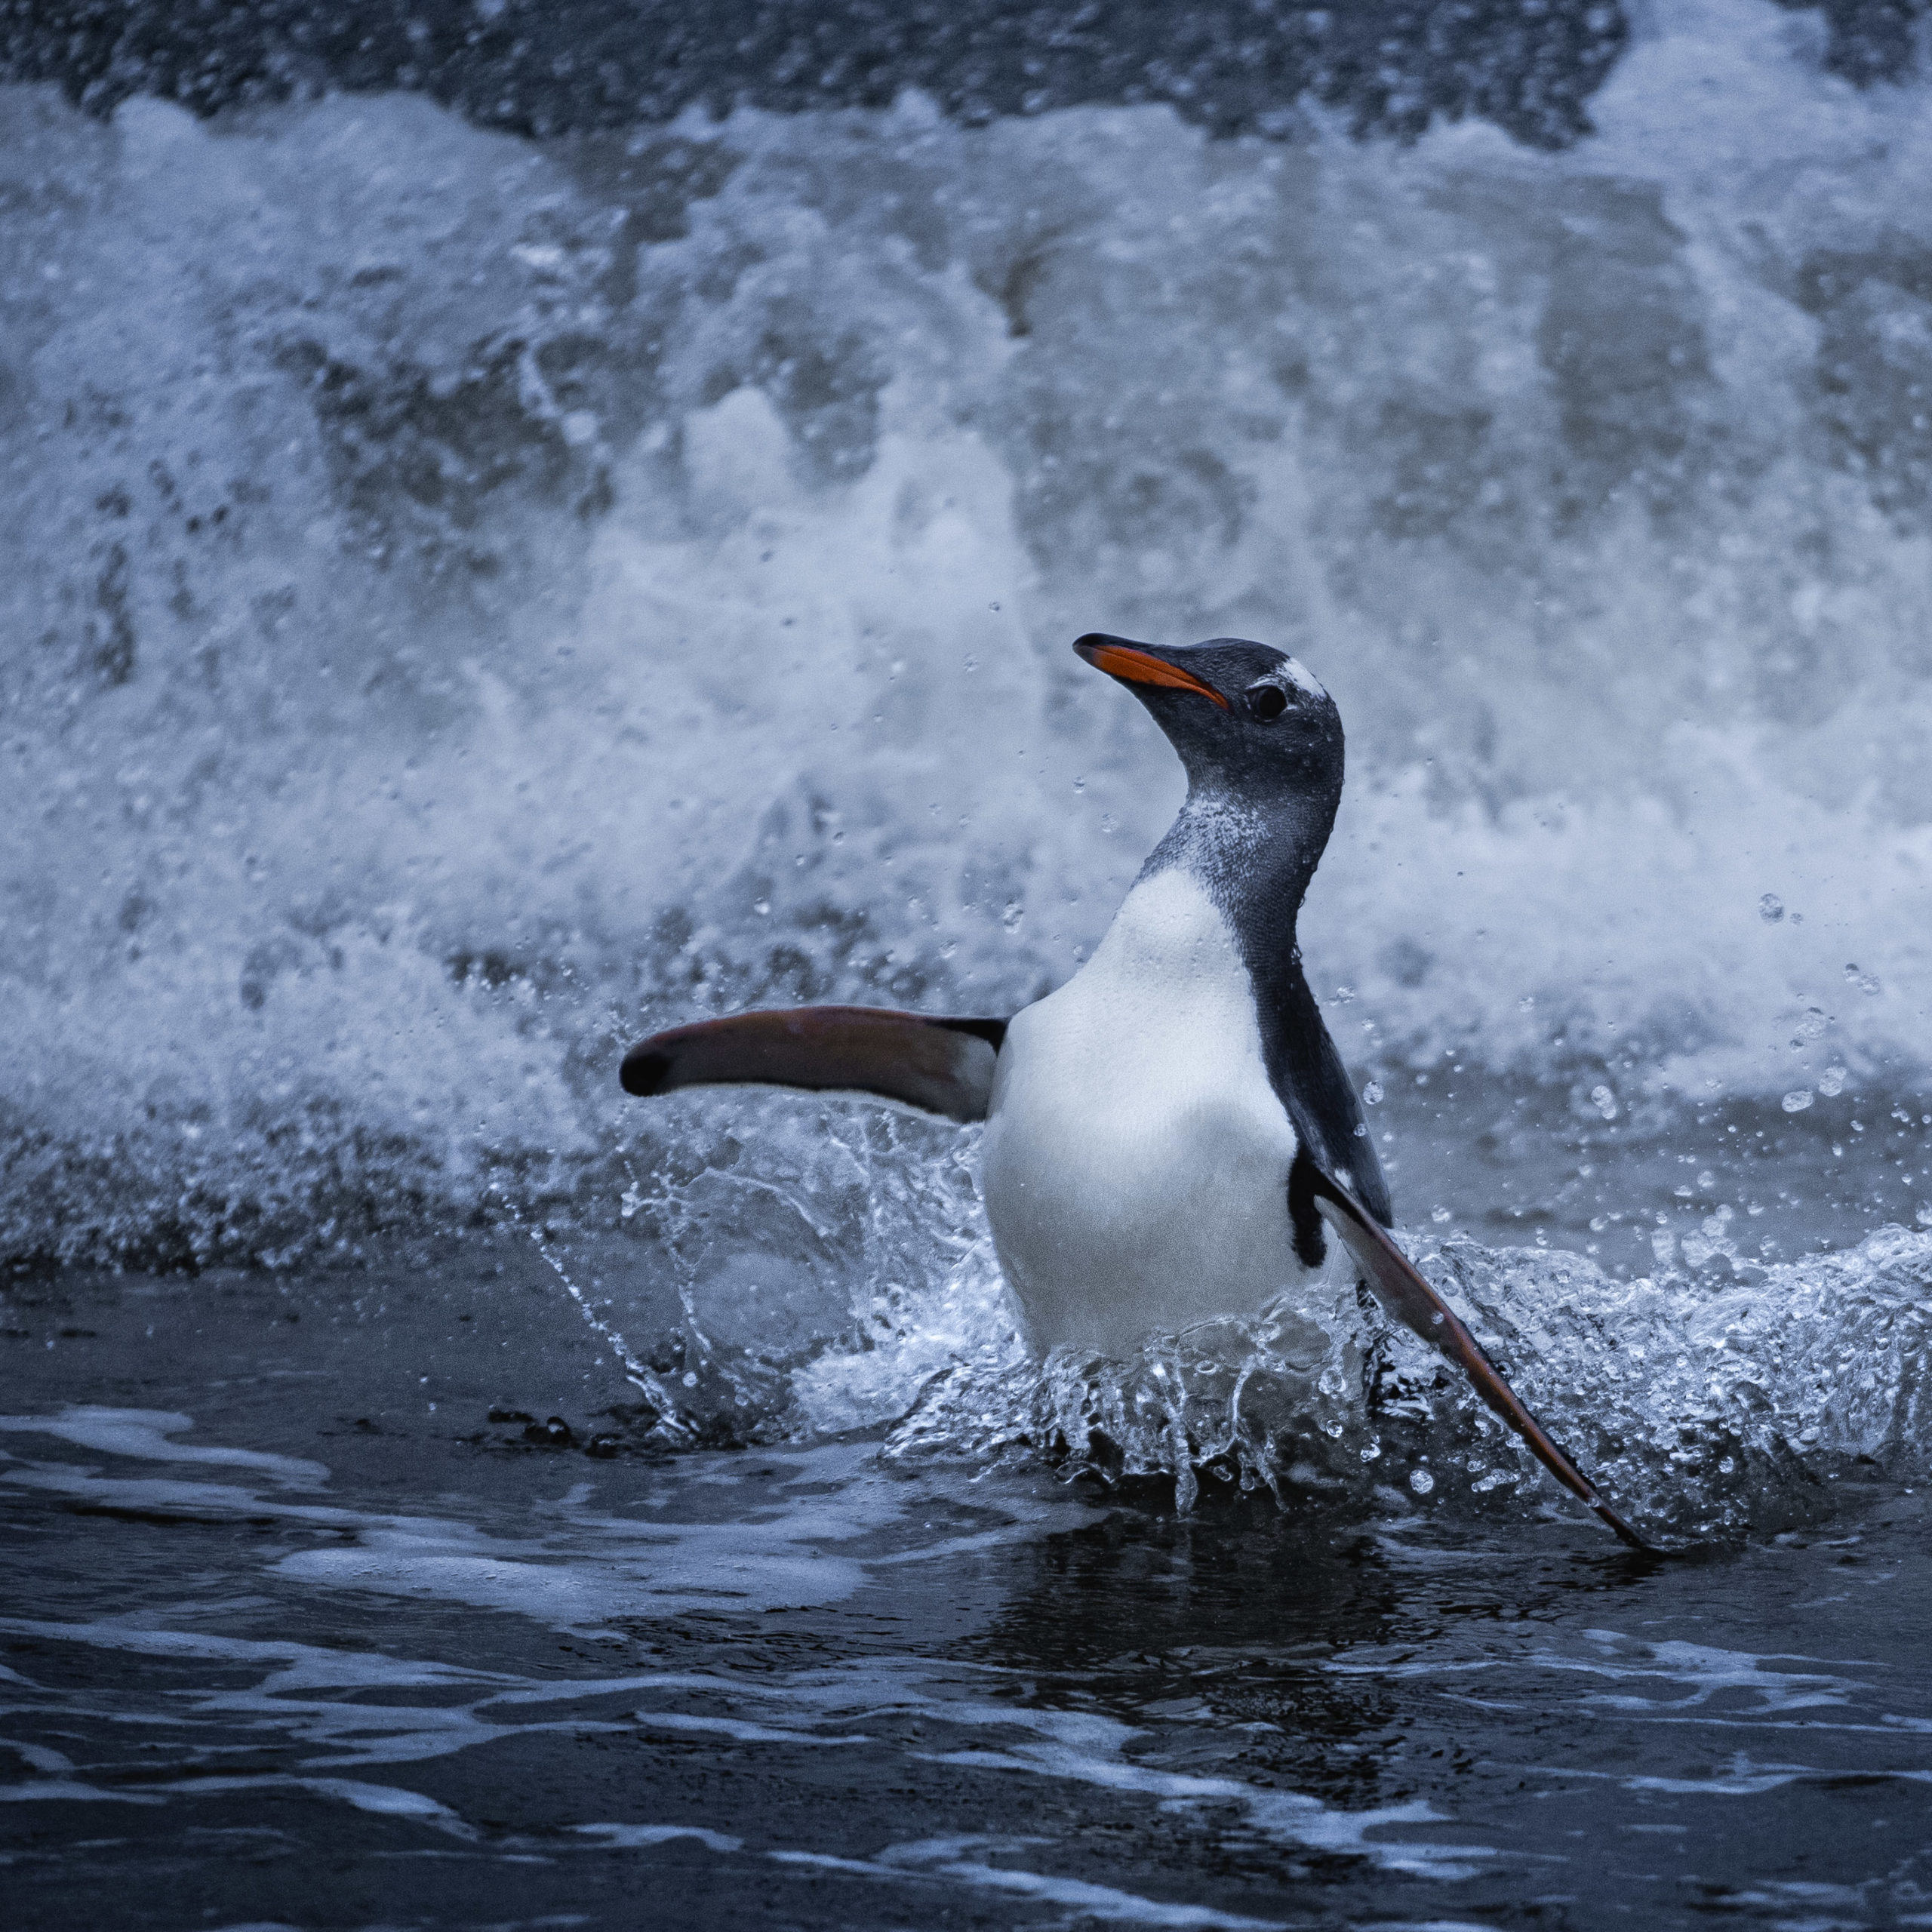 Agentoo penguins return to shore on the Falkland Islands